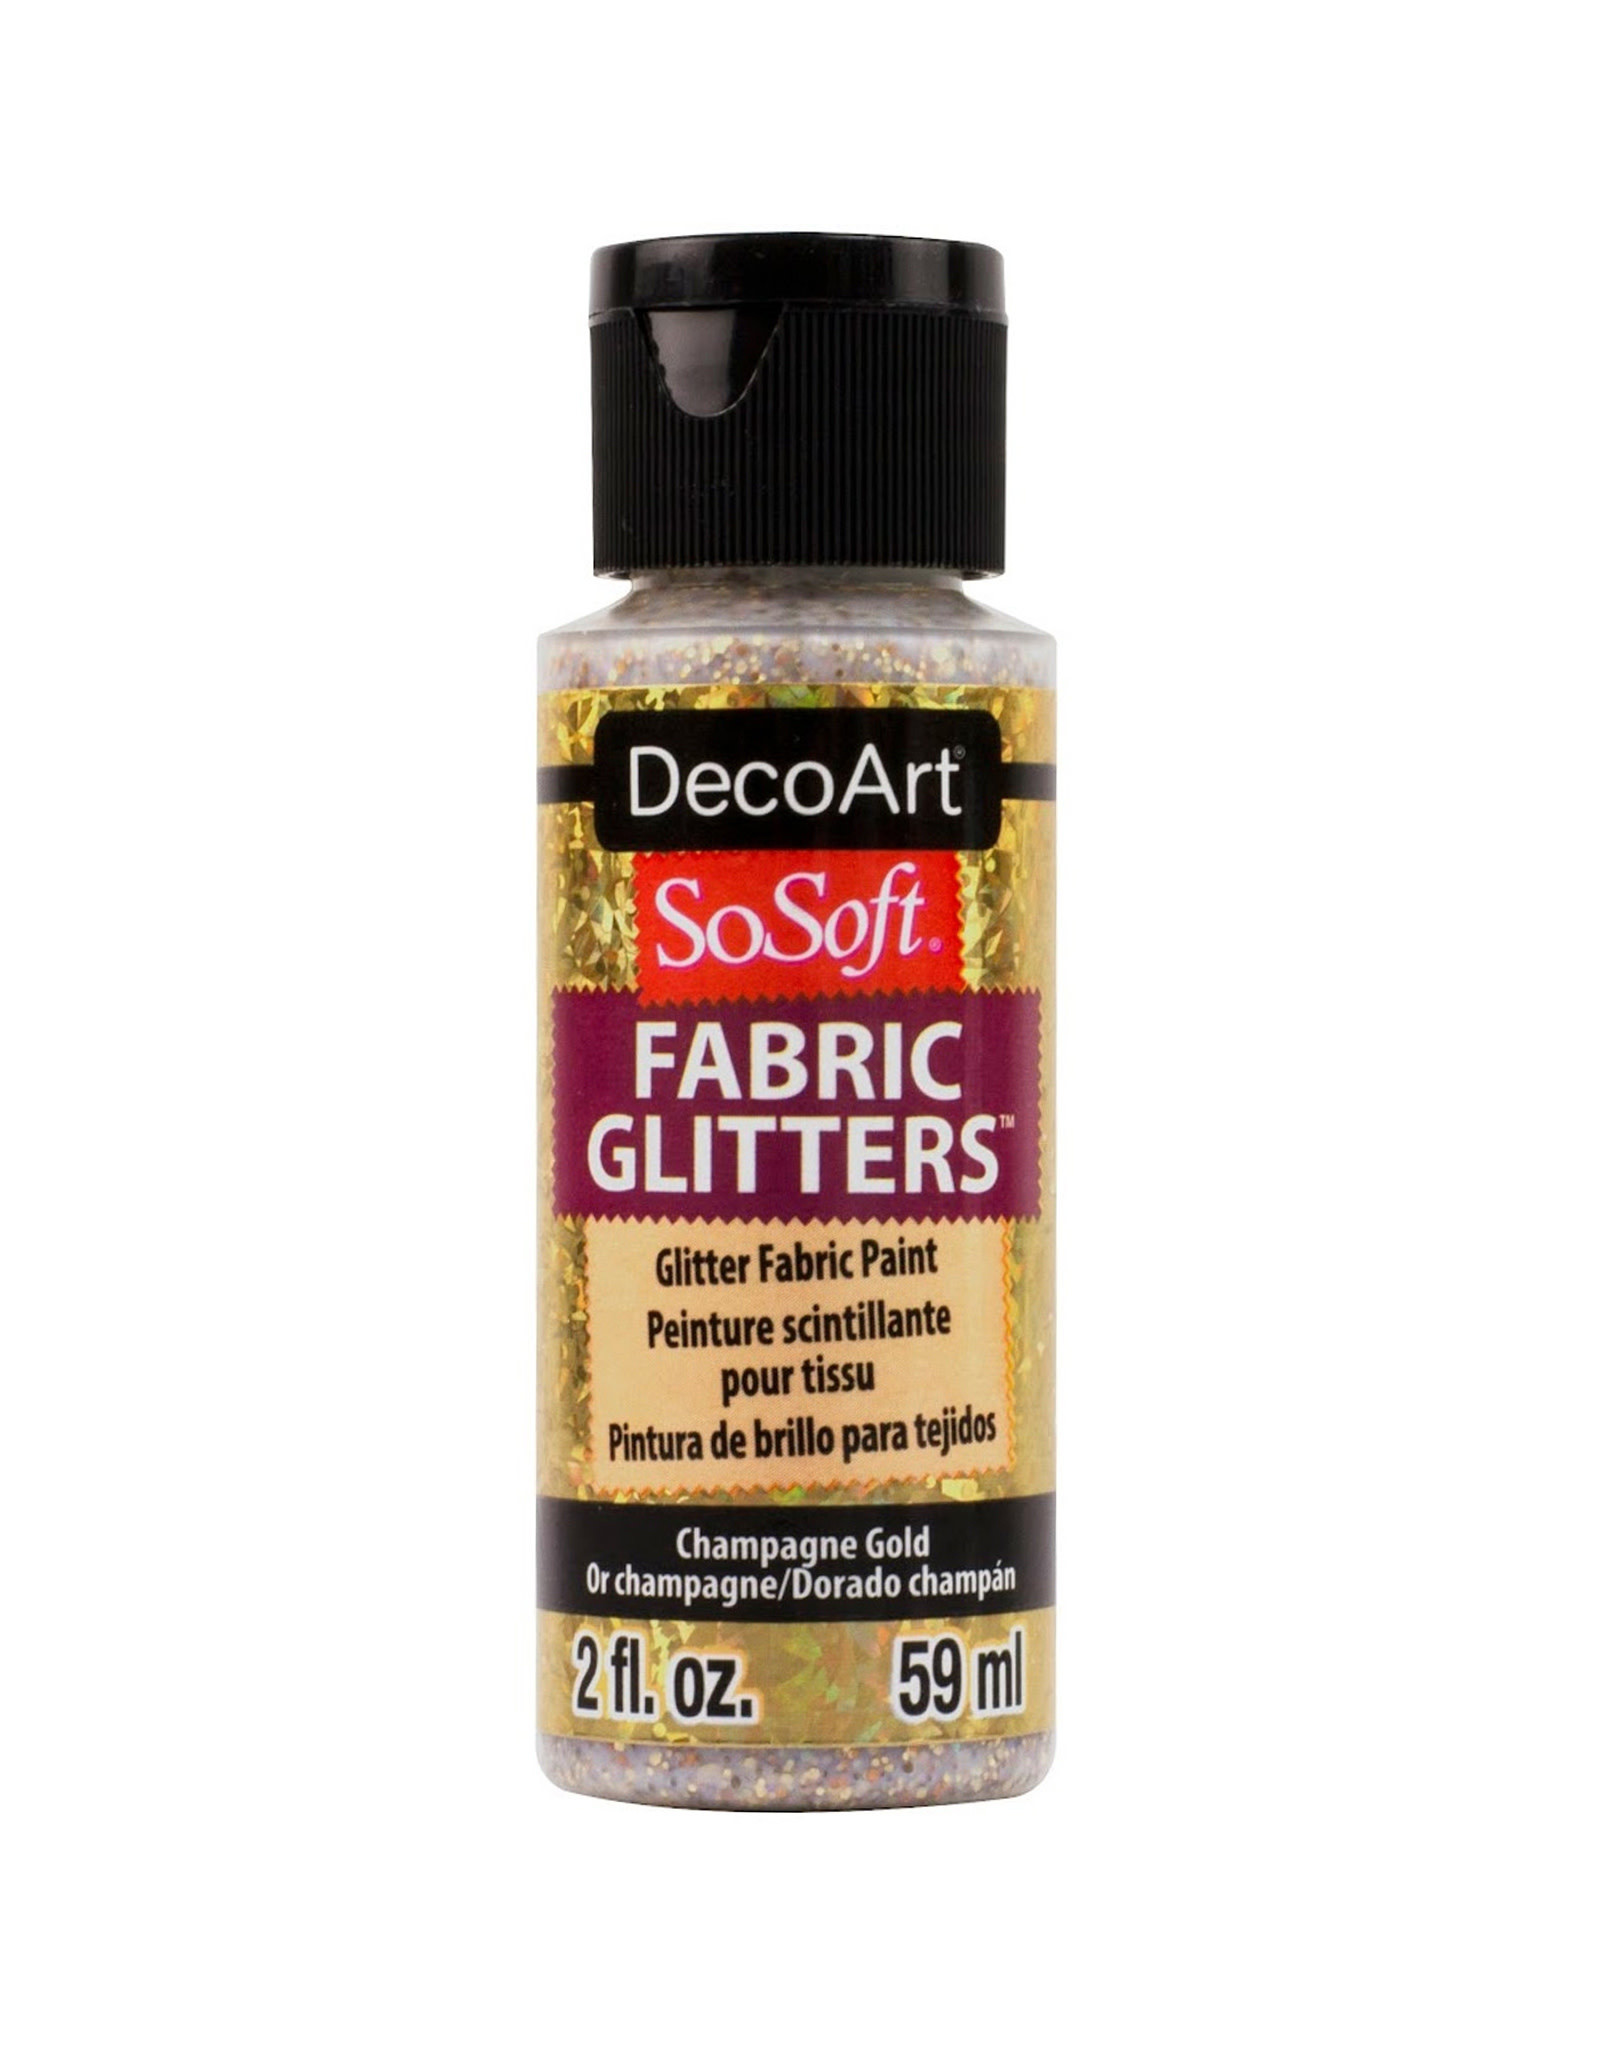 DecoArt DecoArt SoSoft Fabric Glitters, Champagne Gold 2oz